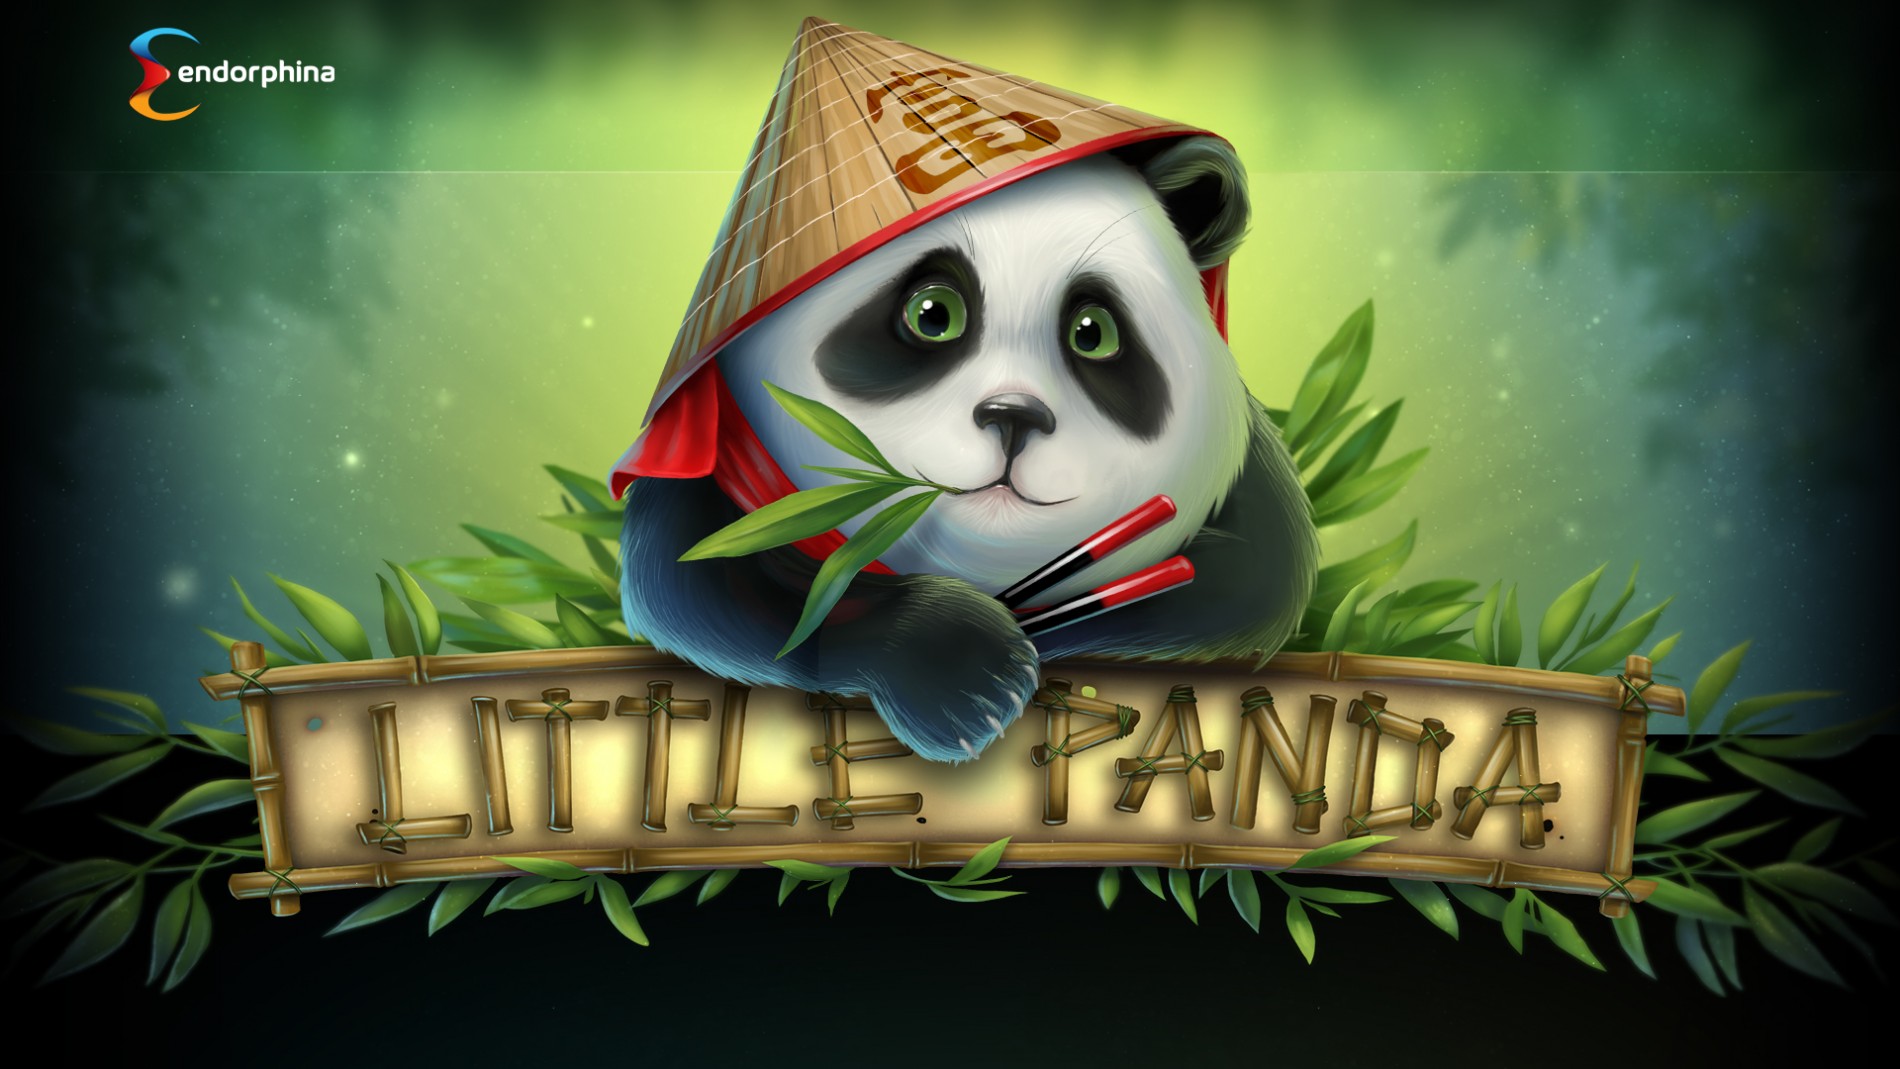 Panda Casino Game